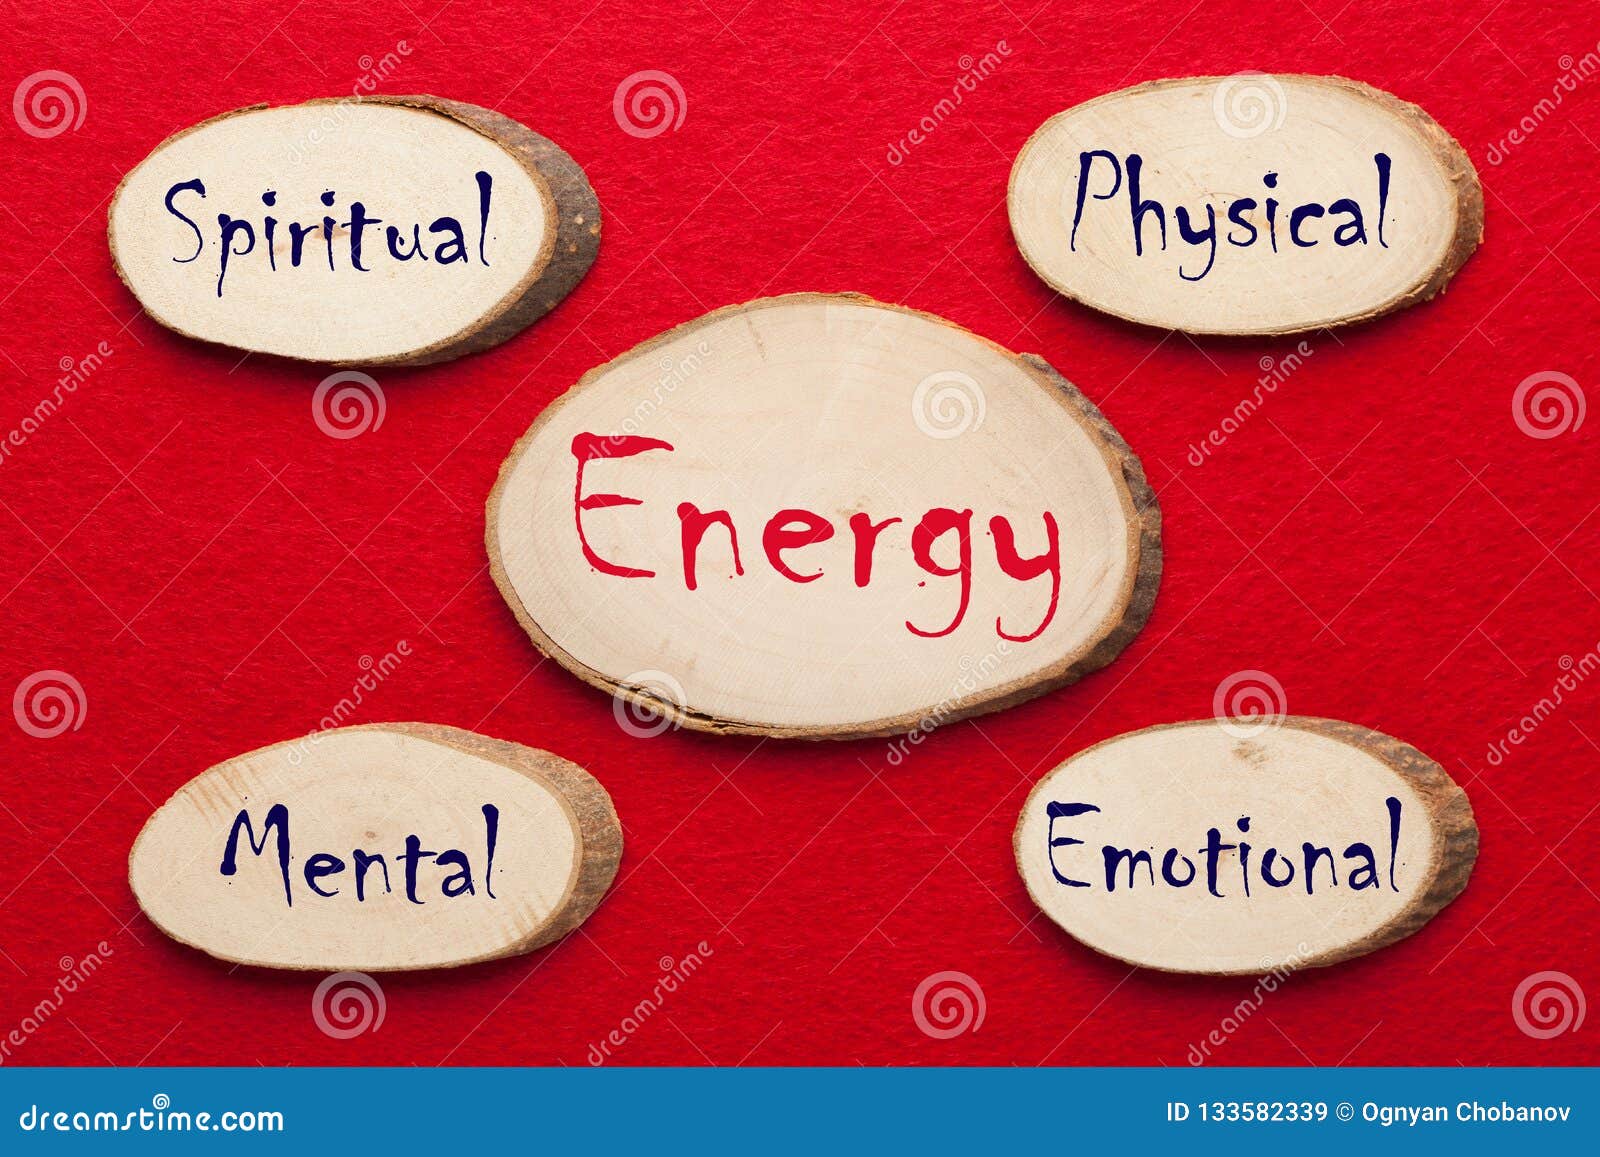 physical, emotional, mental and spiritual